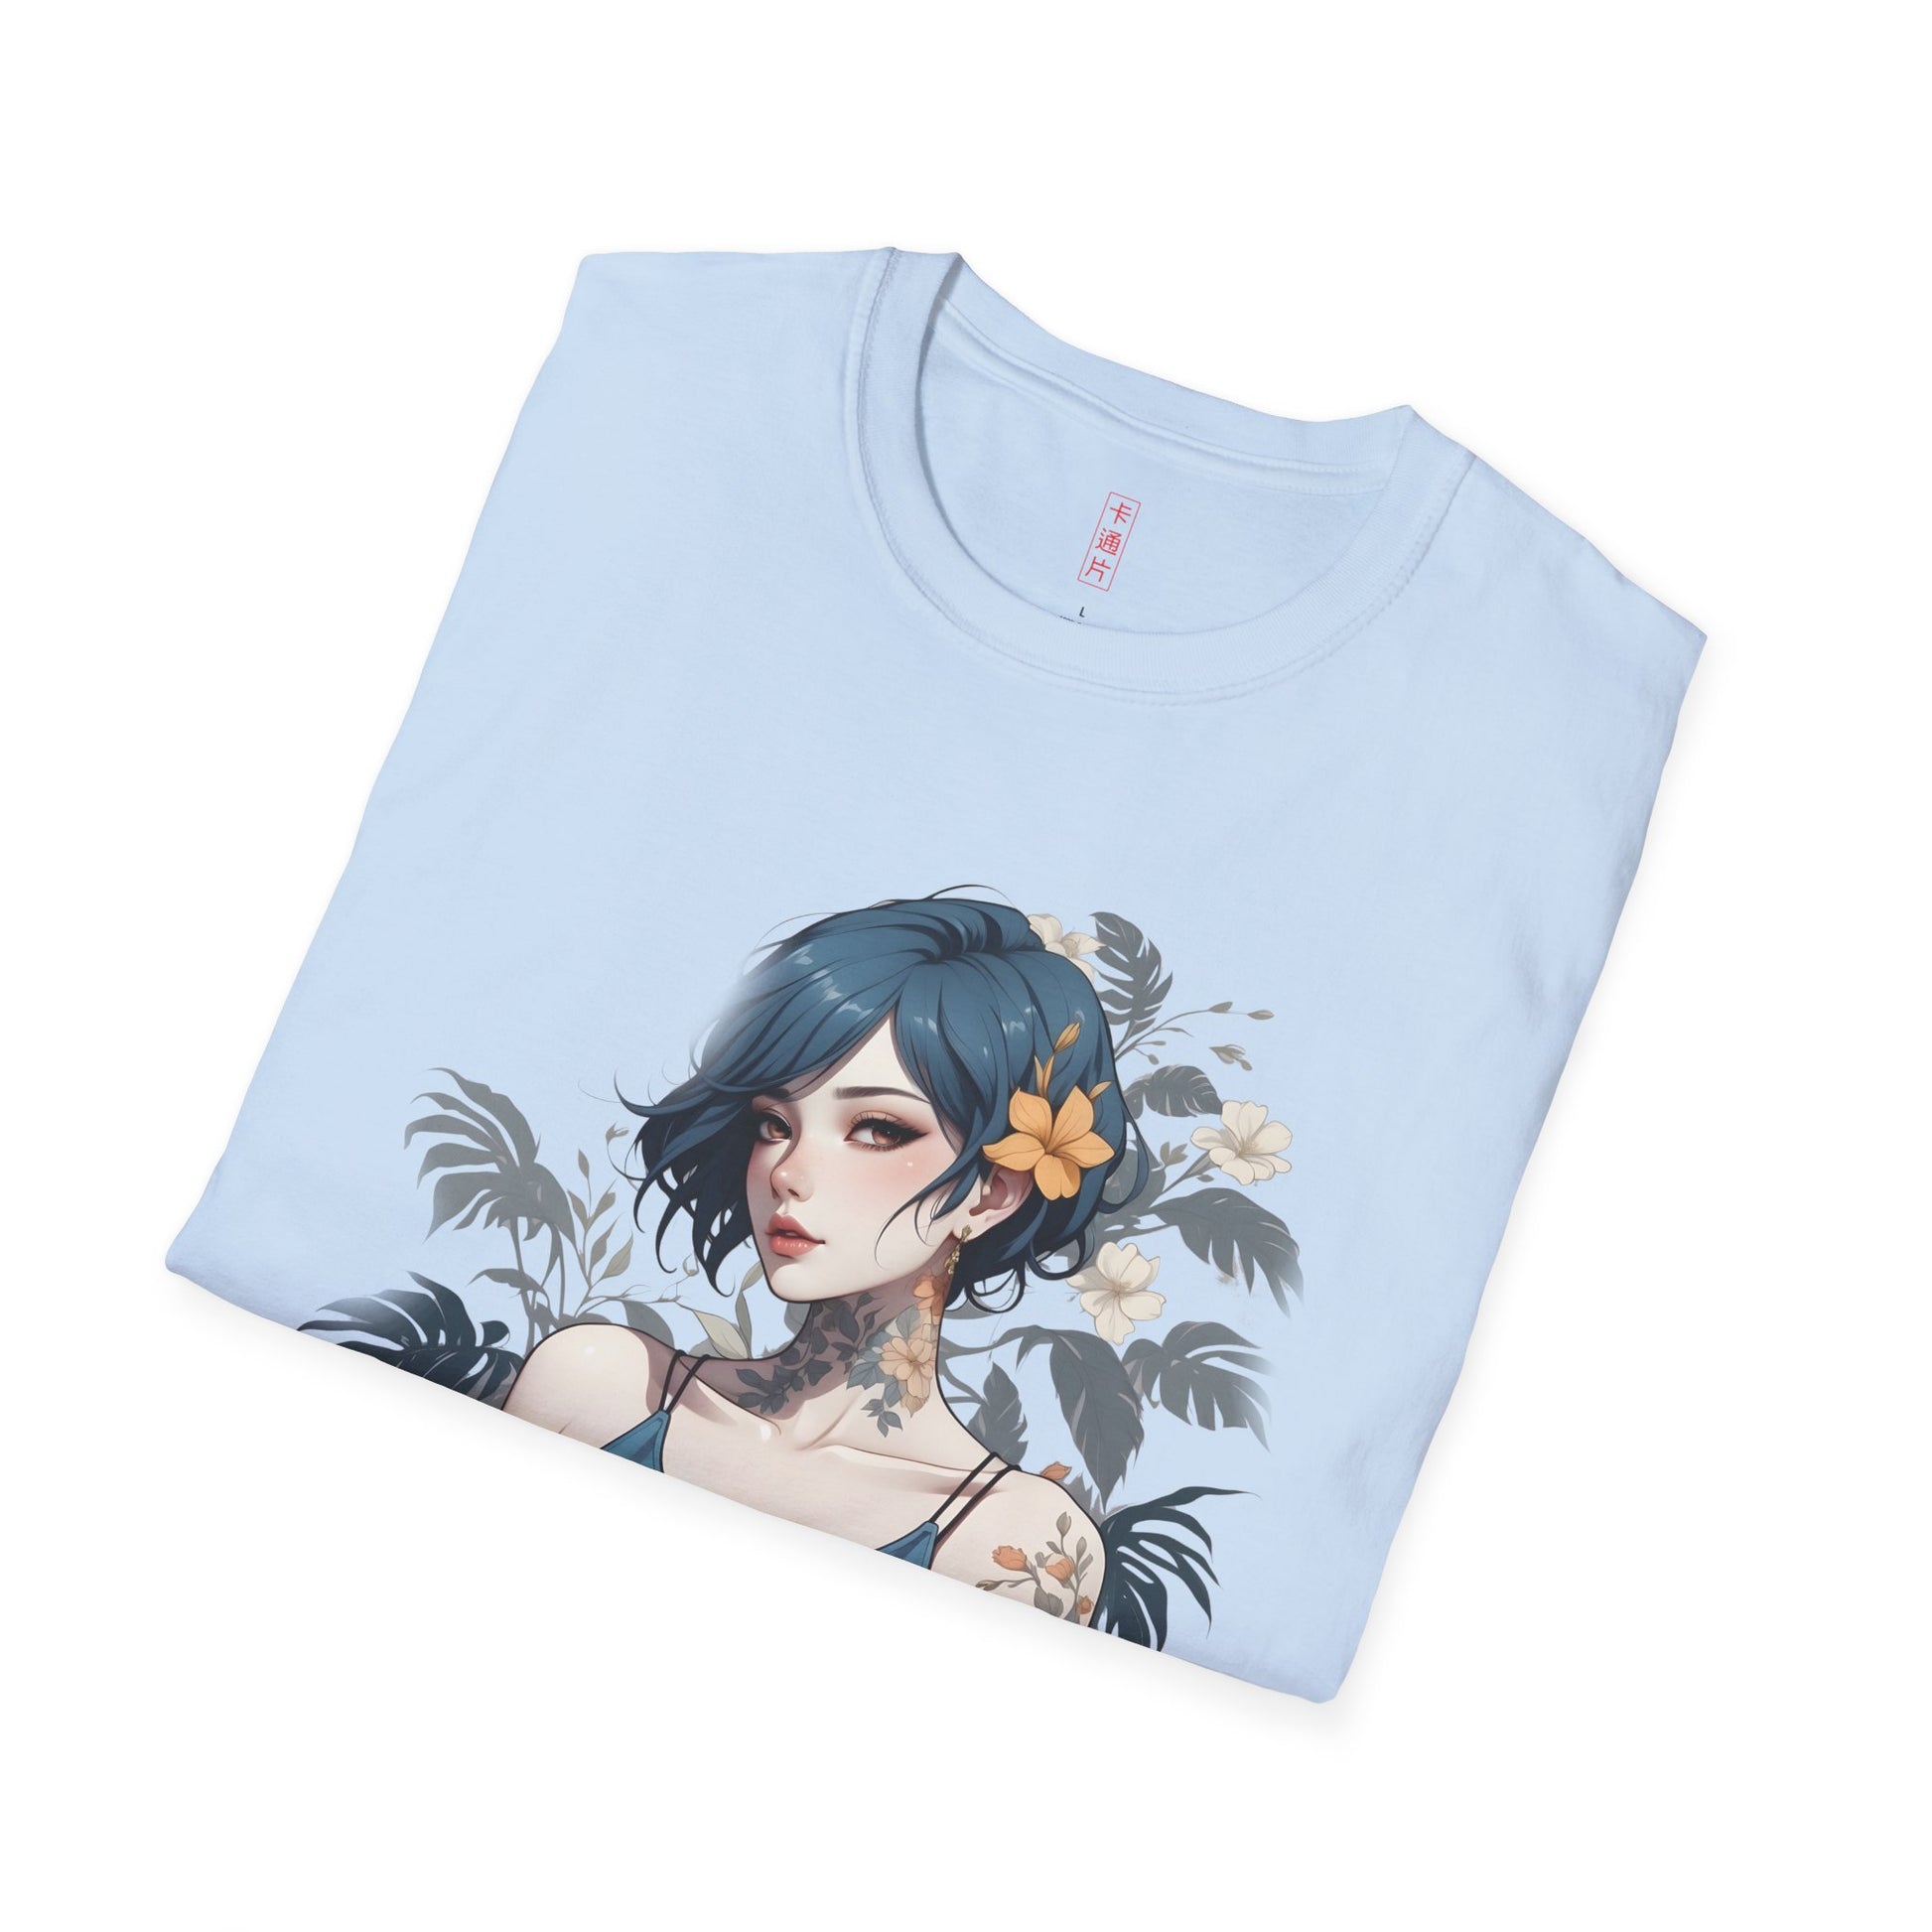 Kǎtōng Piàn - California Love Collection - 034 - Unisex Softstyle T-Shirt Printify